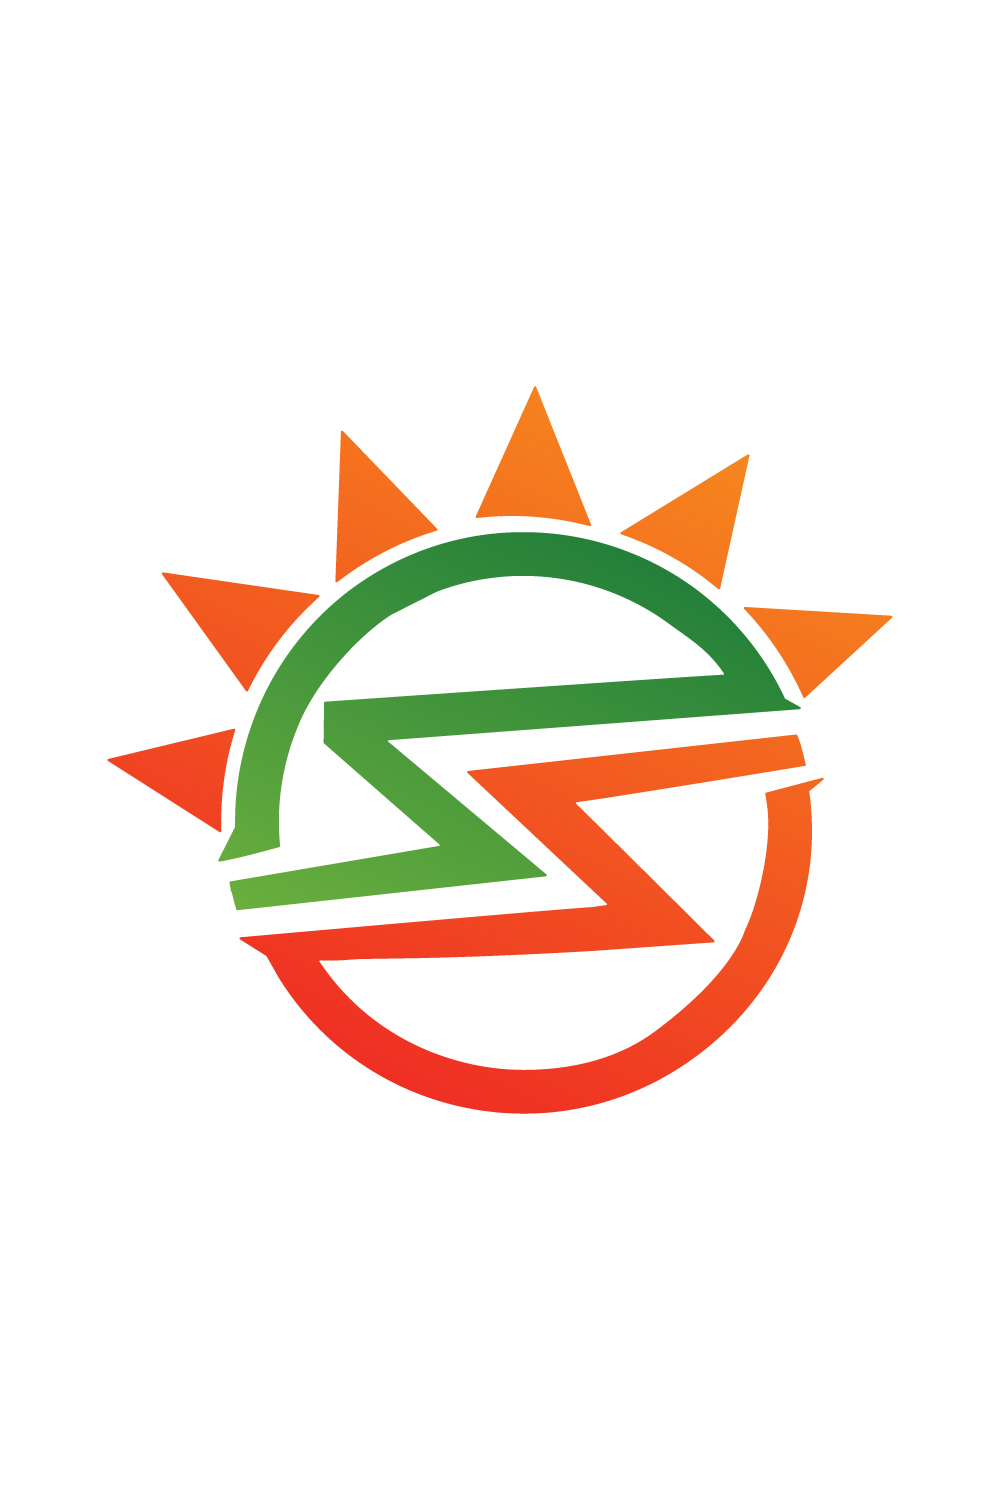 Solar energy logo design vector images Solar Panel logo design Sun Energy Electronic logo template icon pinterest preview image.